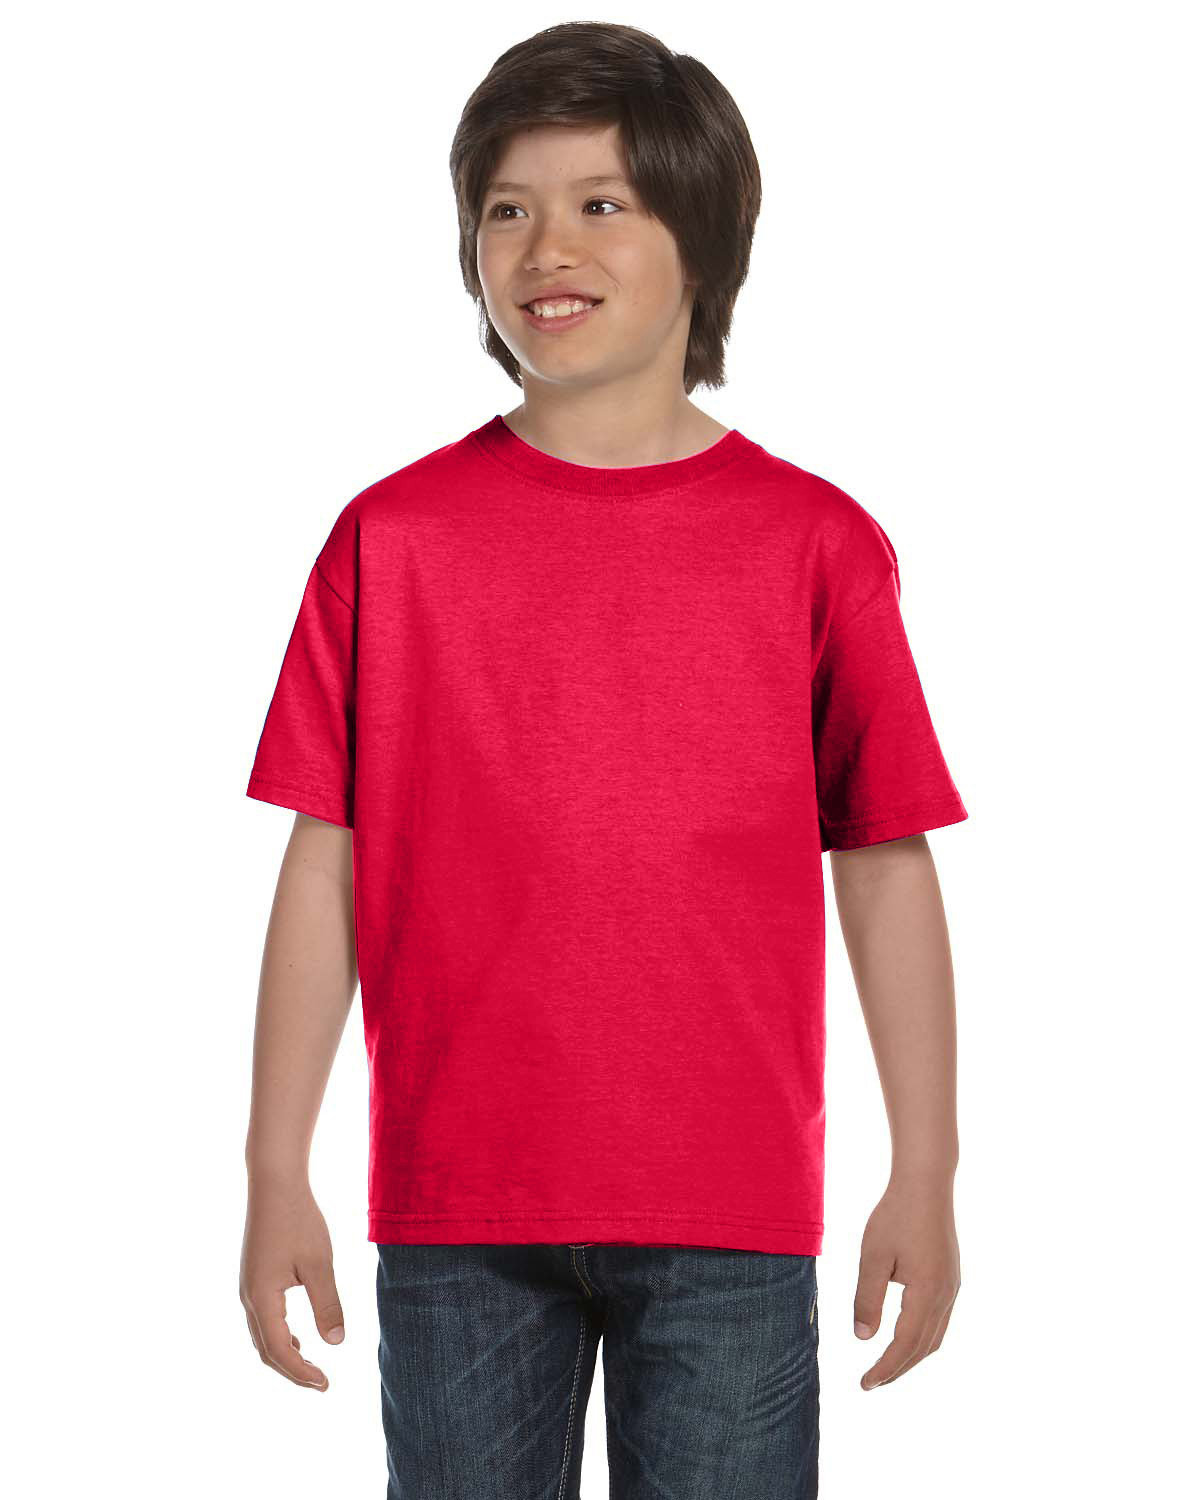 Gildan Youth 50/50 T-Shirt SPRT SCARLET RED 